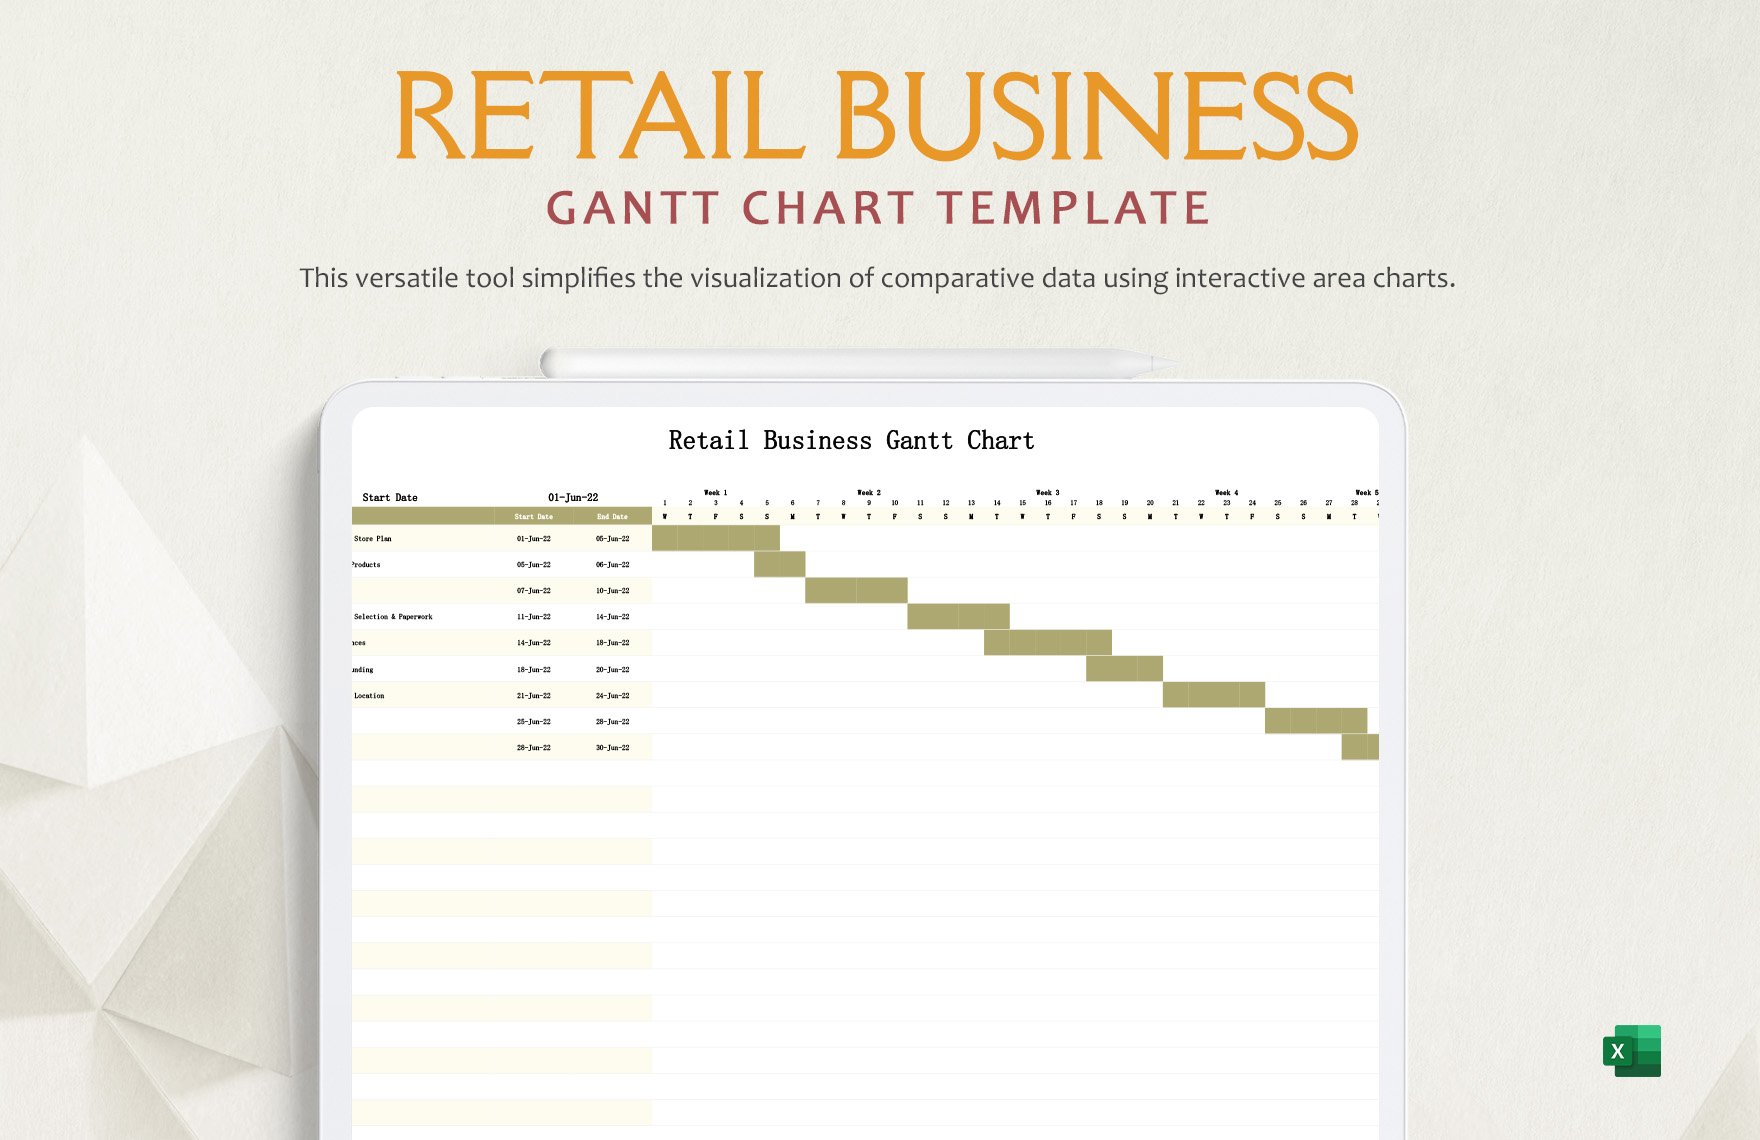 Retail Business Gantt Chart Template in Excel